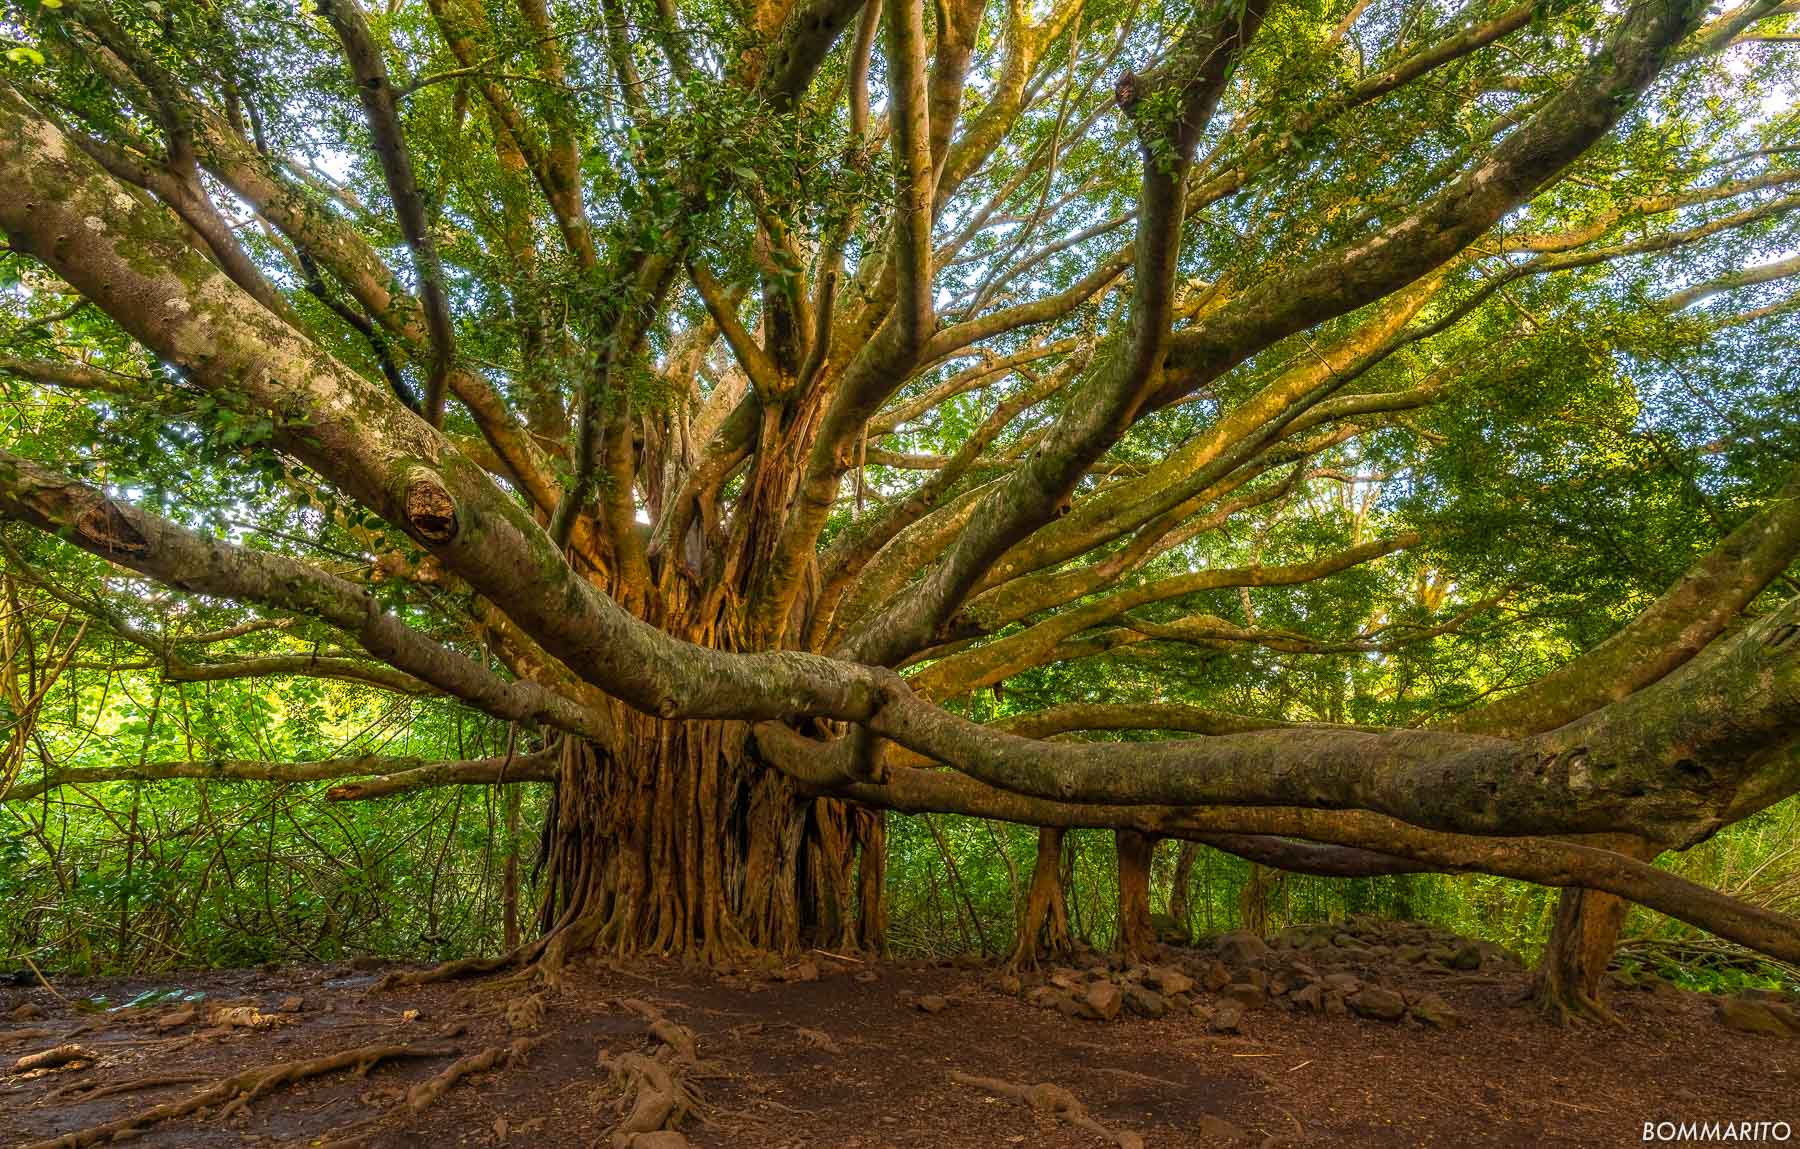 Banyan Tree